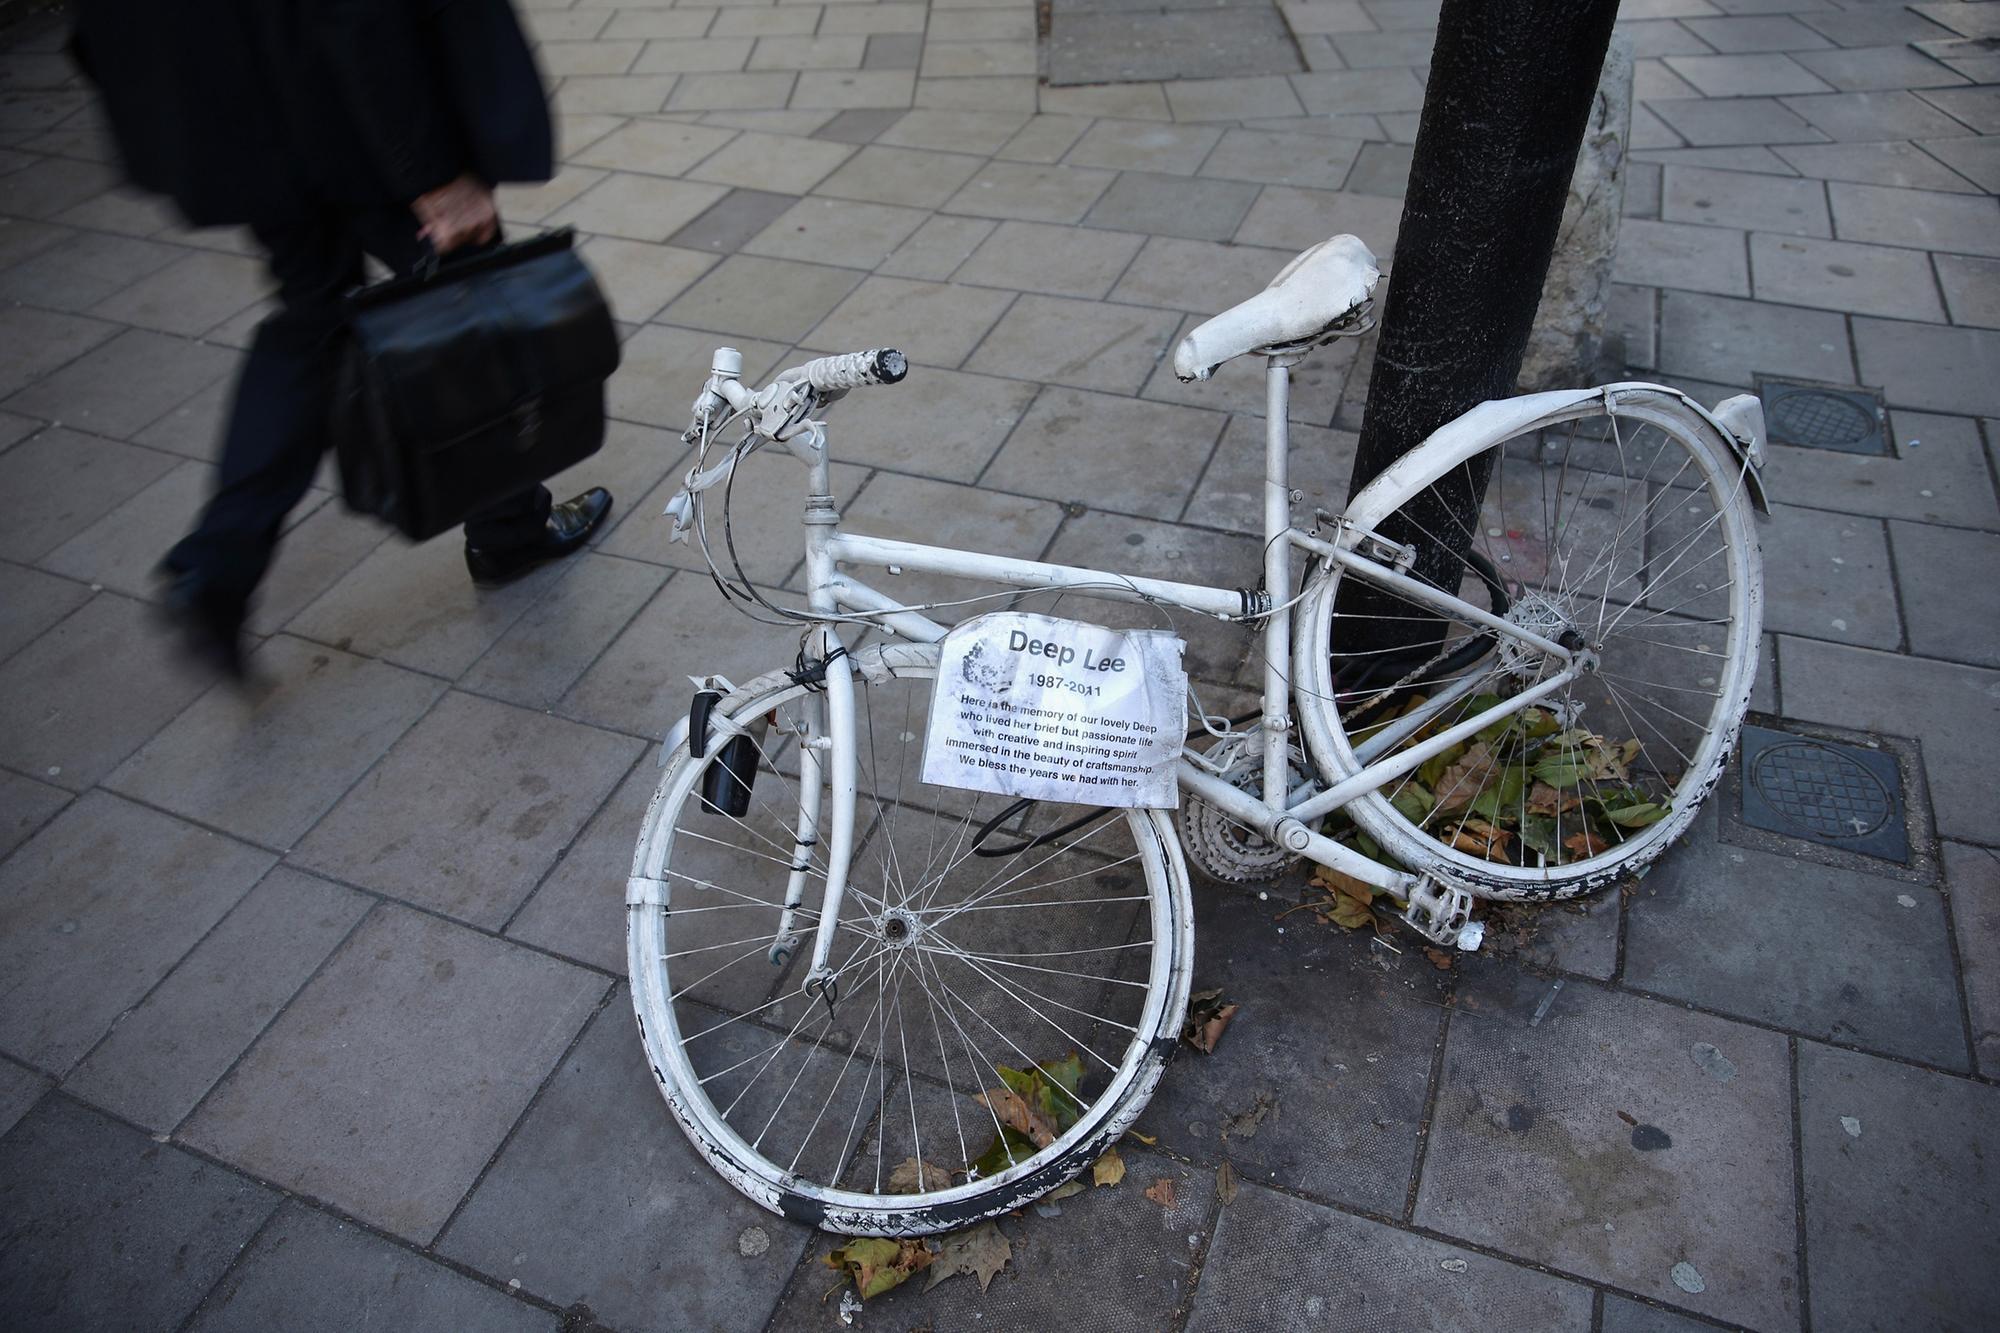 edinburgh must take cyclists' safety seriously - jodi gordon